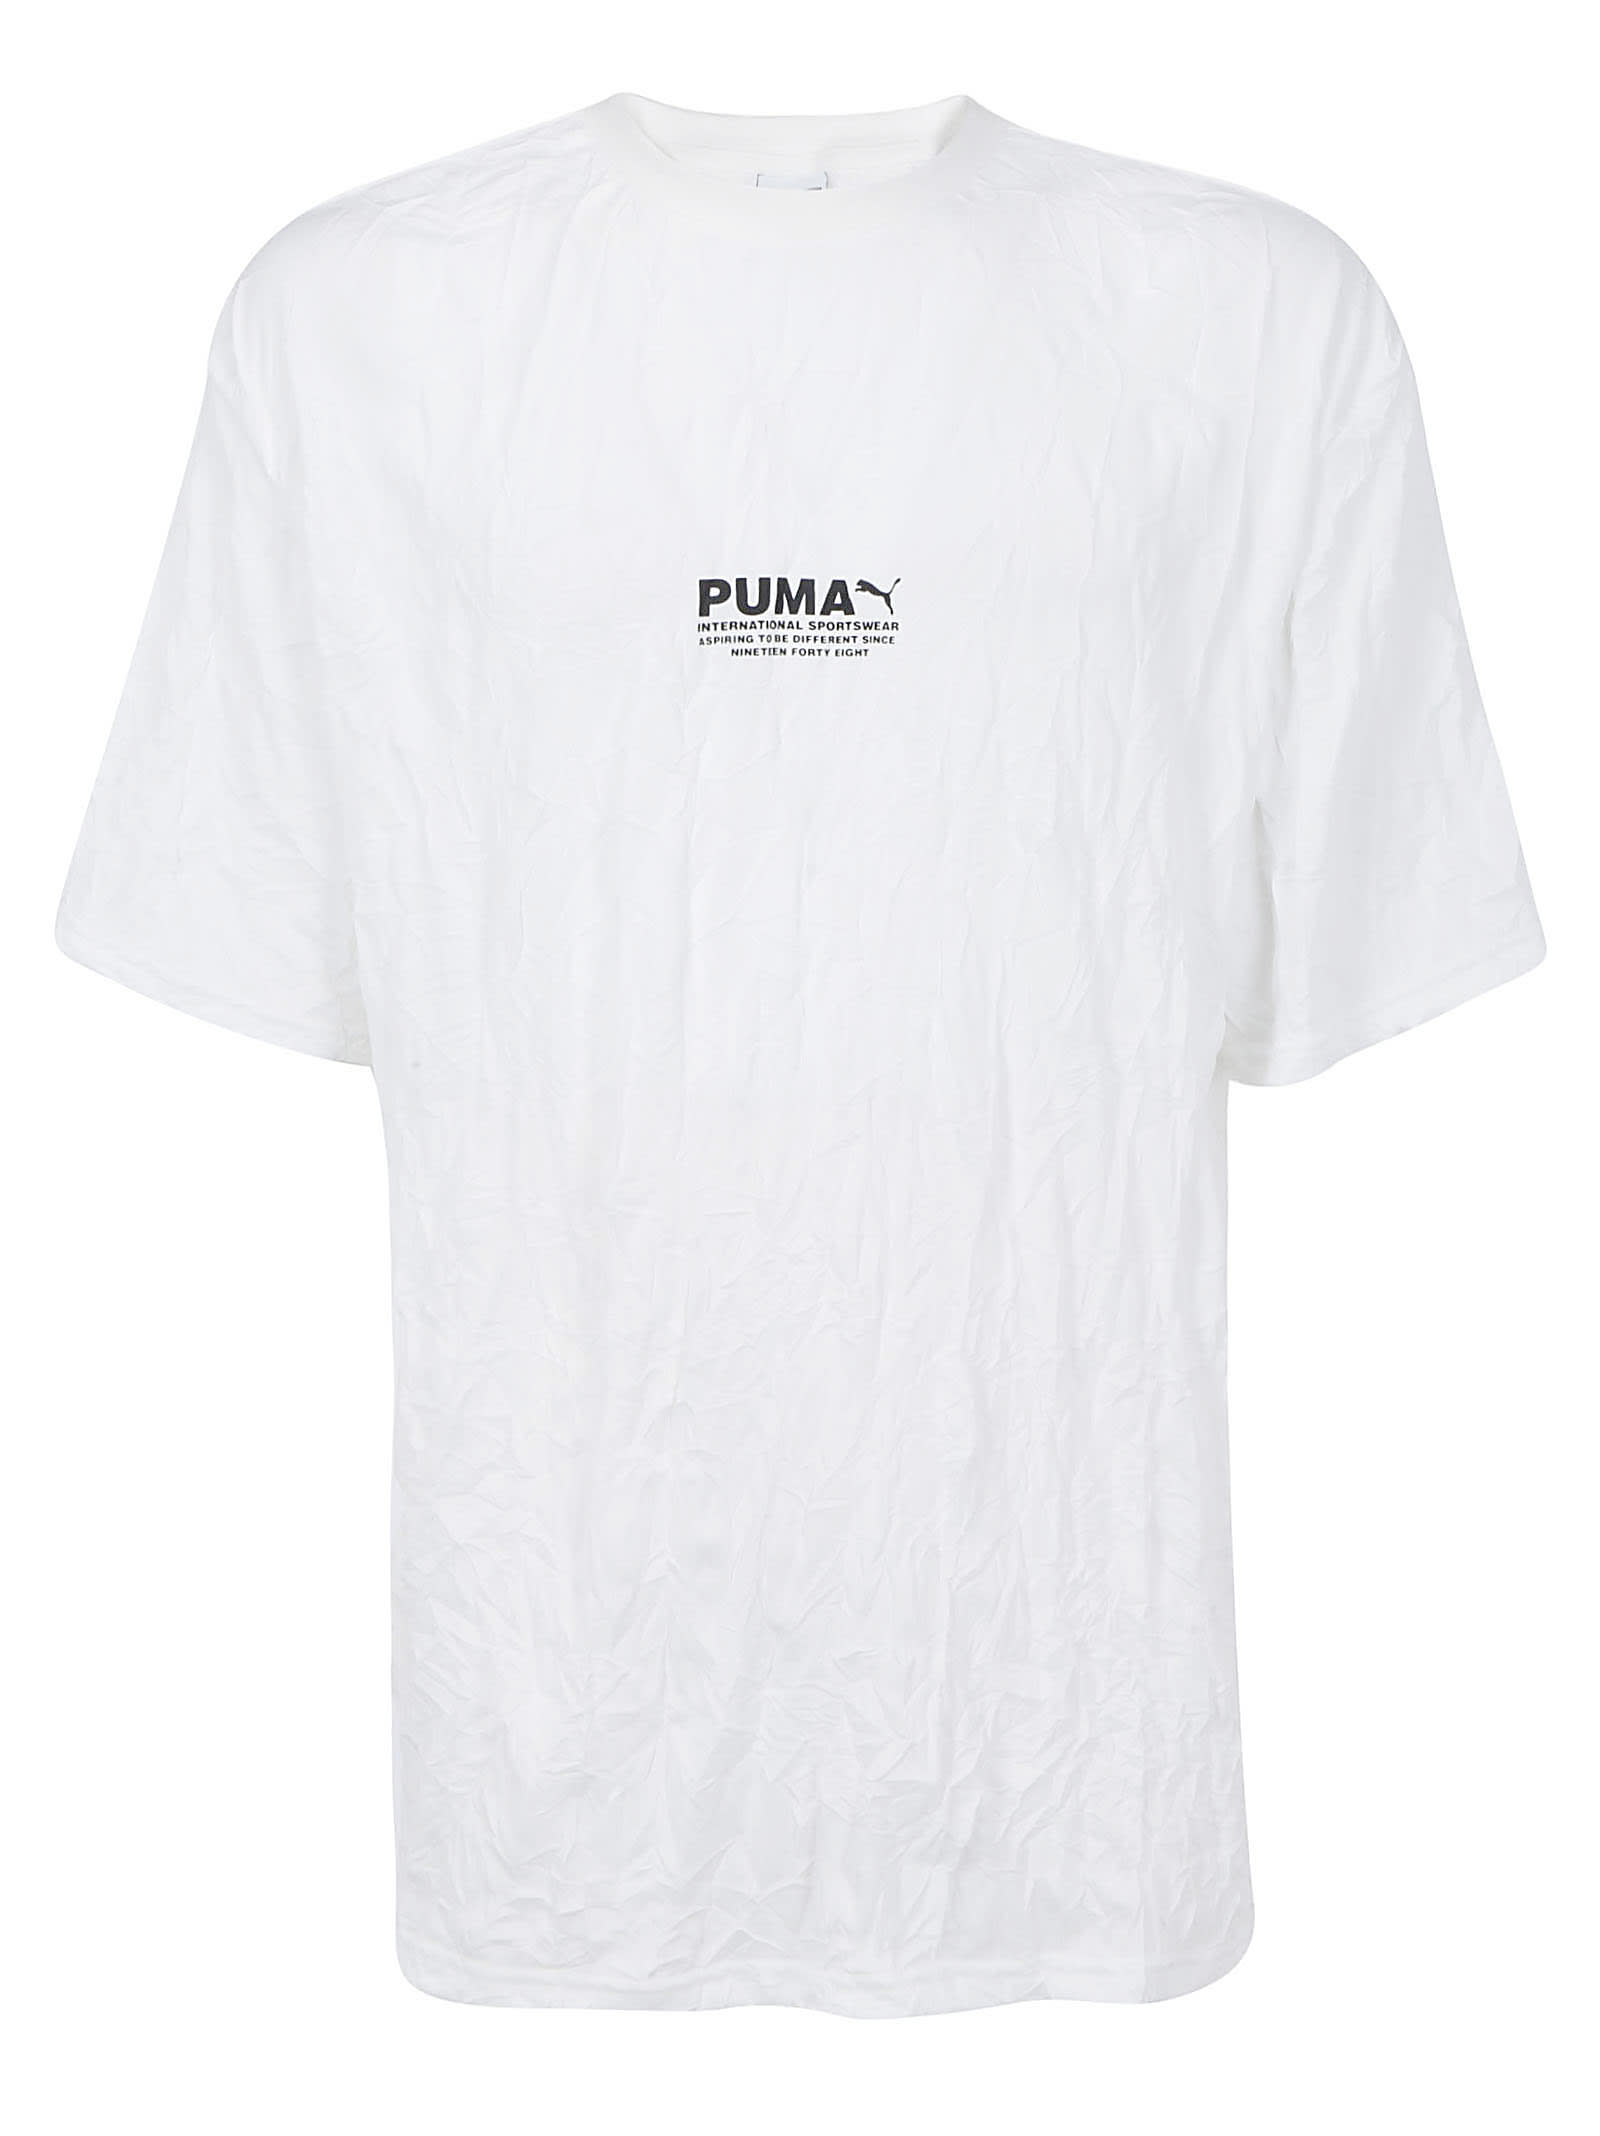 Puma Short Sleeve T Shirts Italist Always Like A Sale